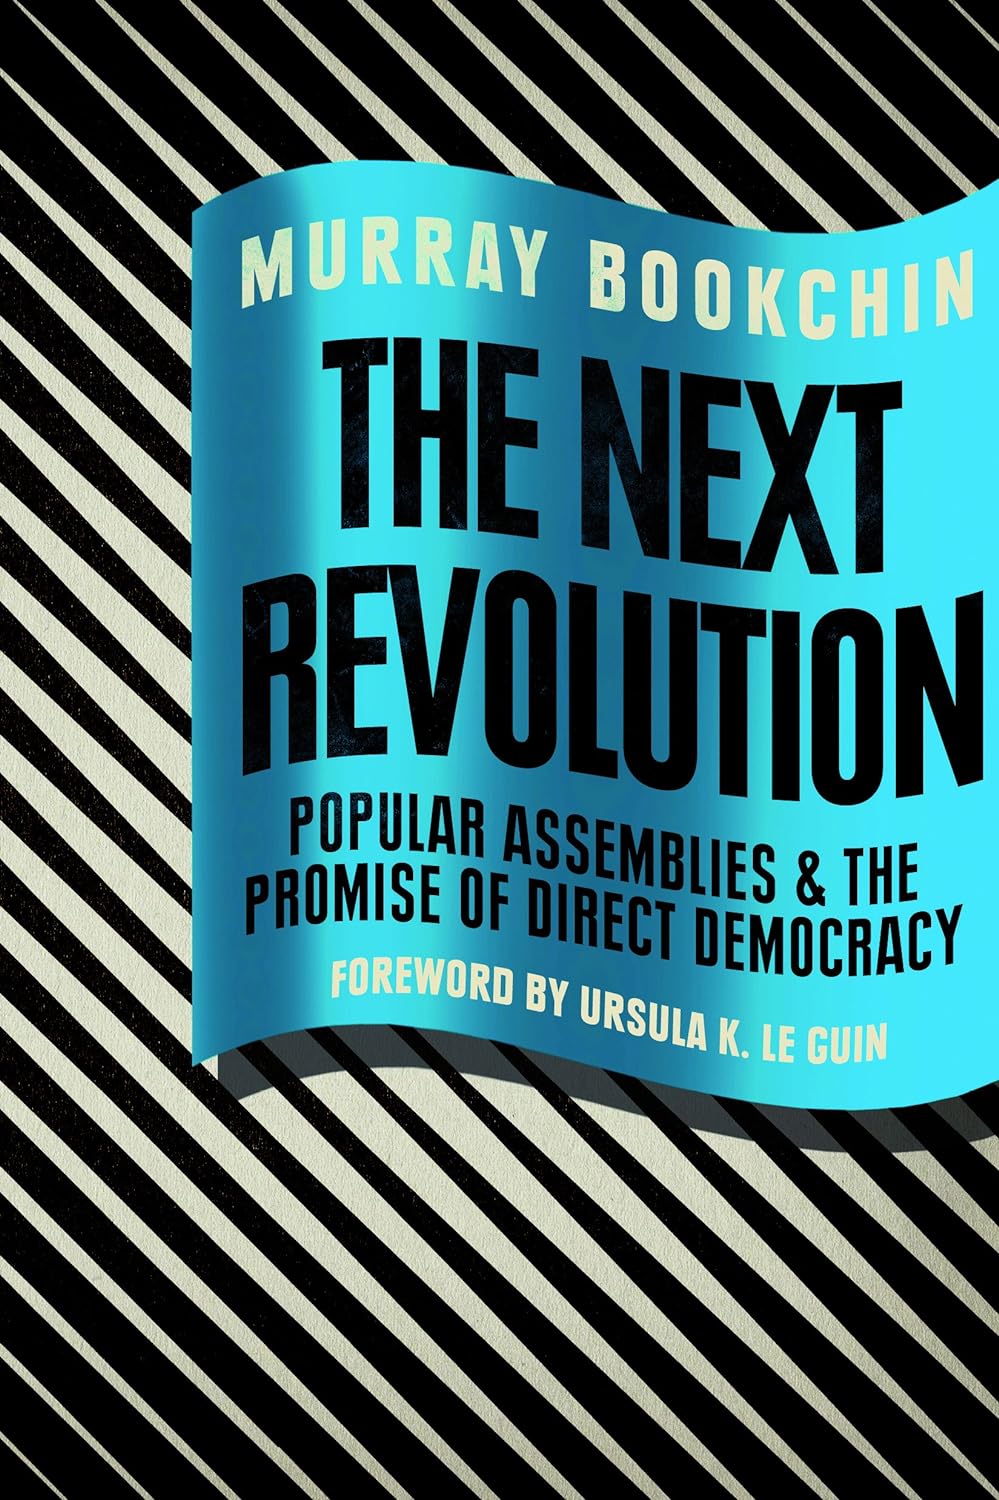 Murray Bookchin: The next revolution (2015, Verso)